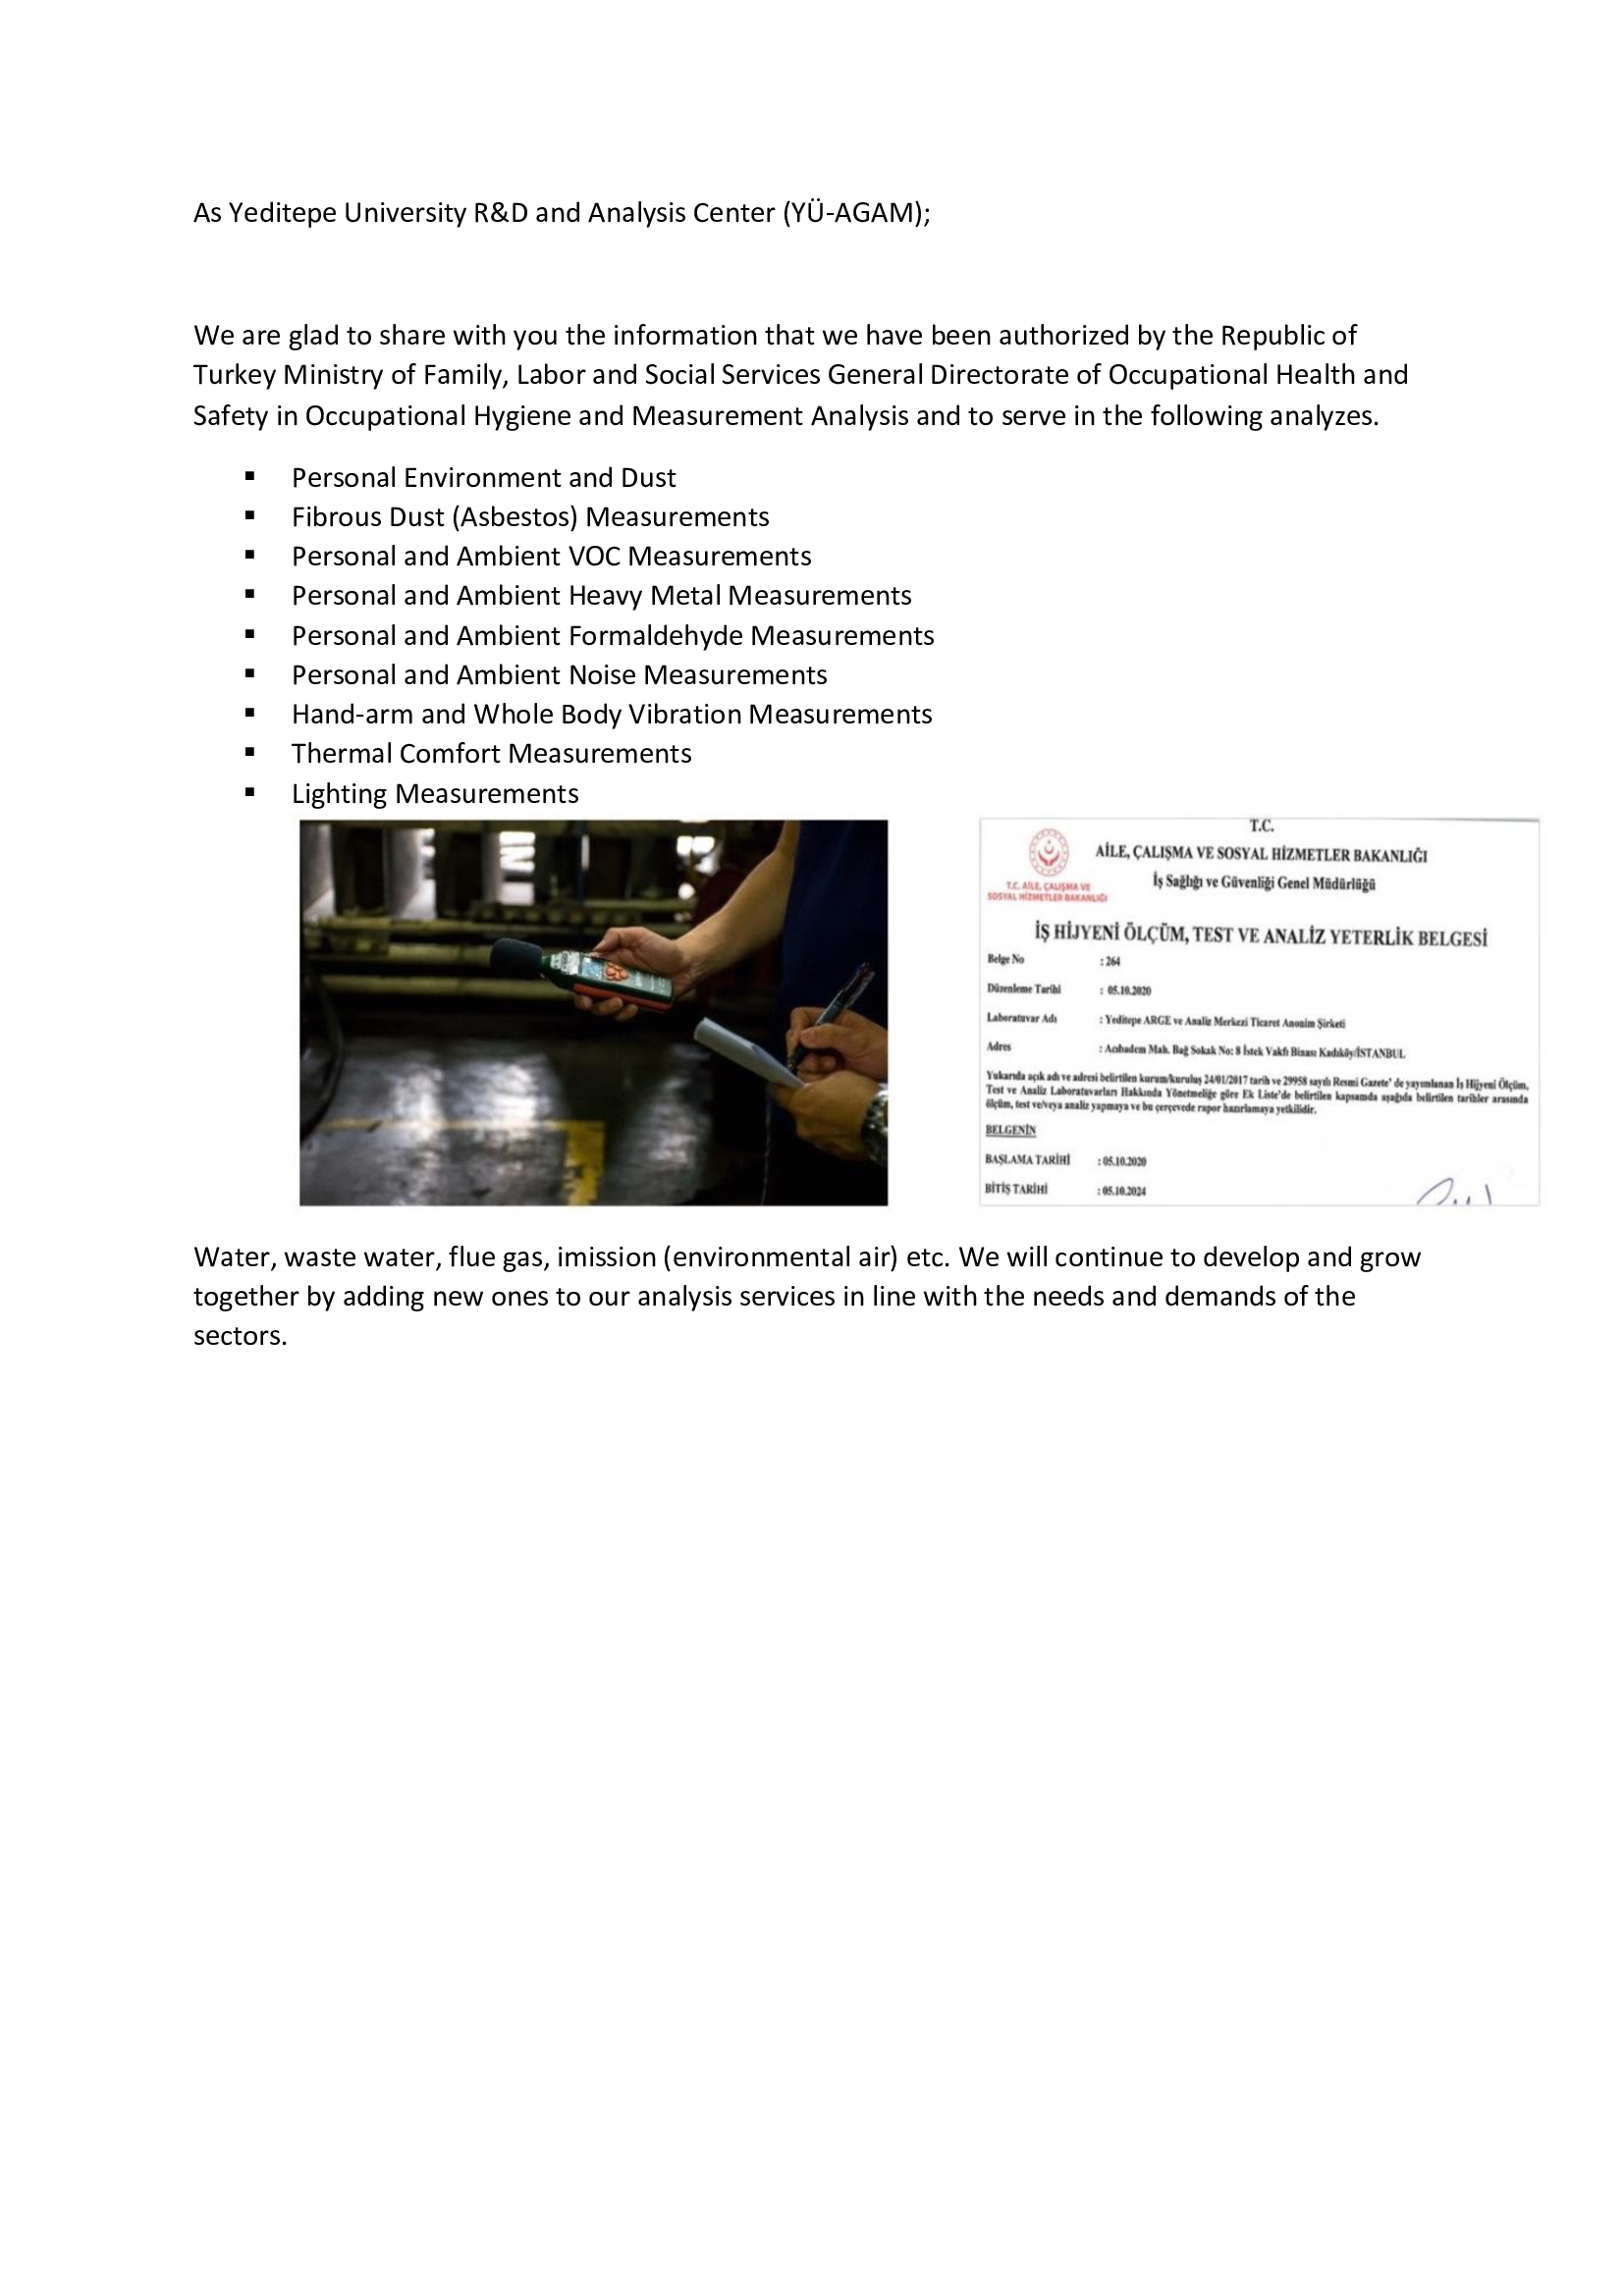 Occupational Hygiene (ISG) Measurement and Analysis Laboratory